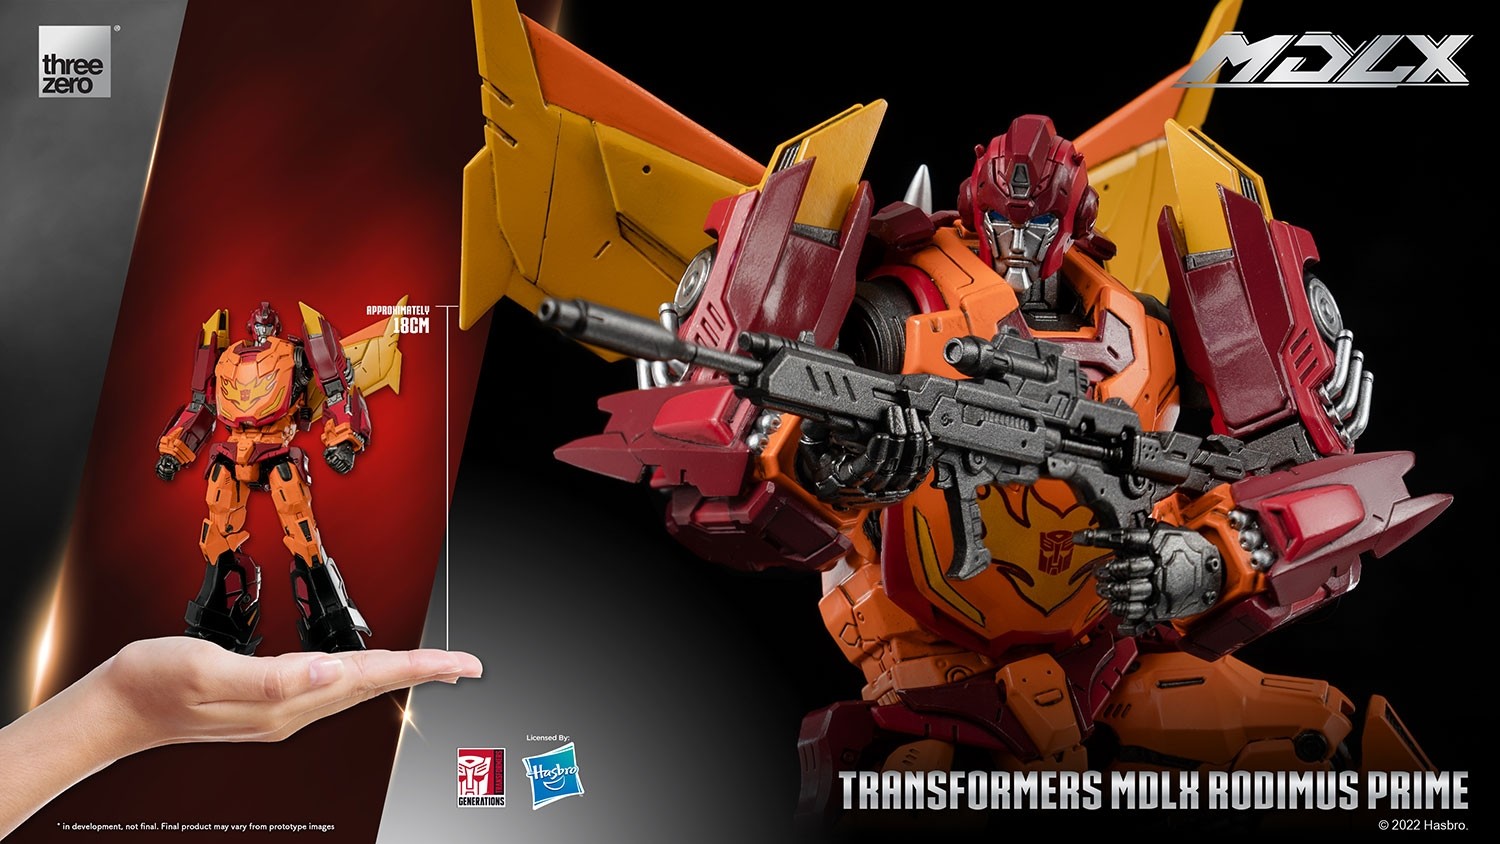 Transformers MDLX Rodimus Prime